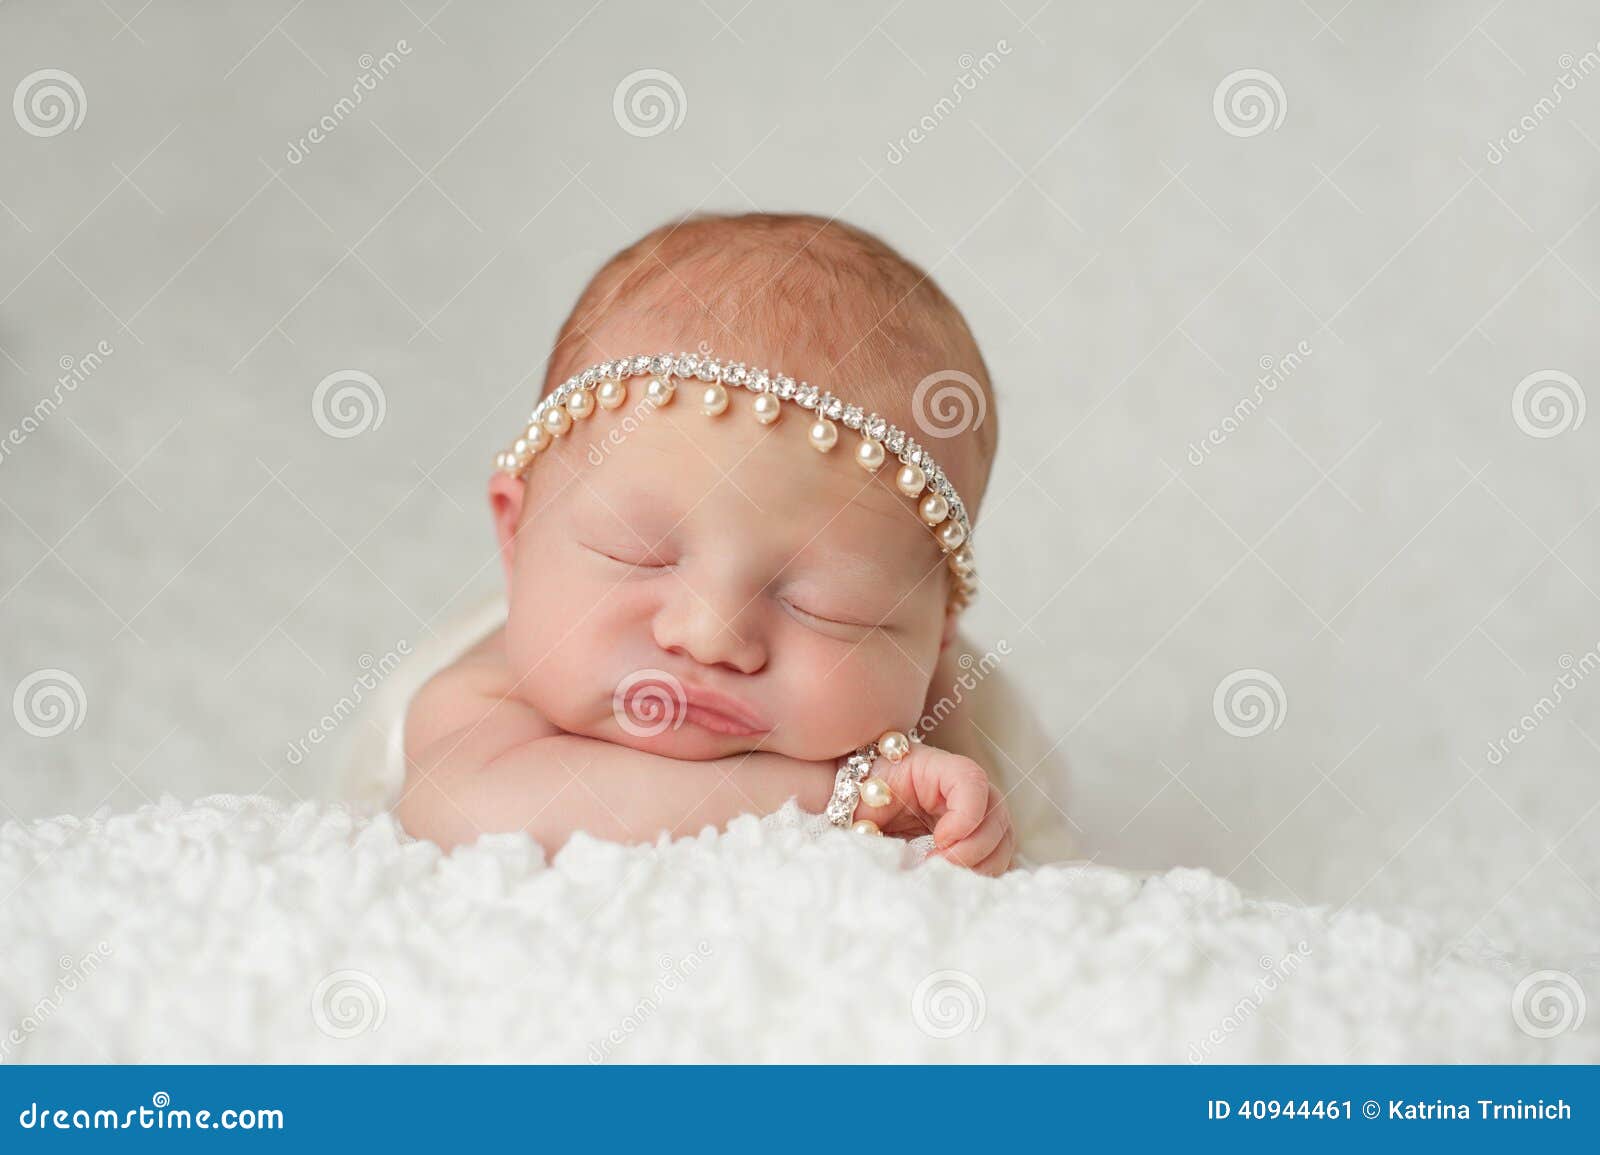 newborn baby girl with rhinestone and pearl headband